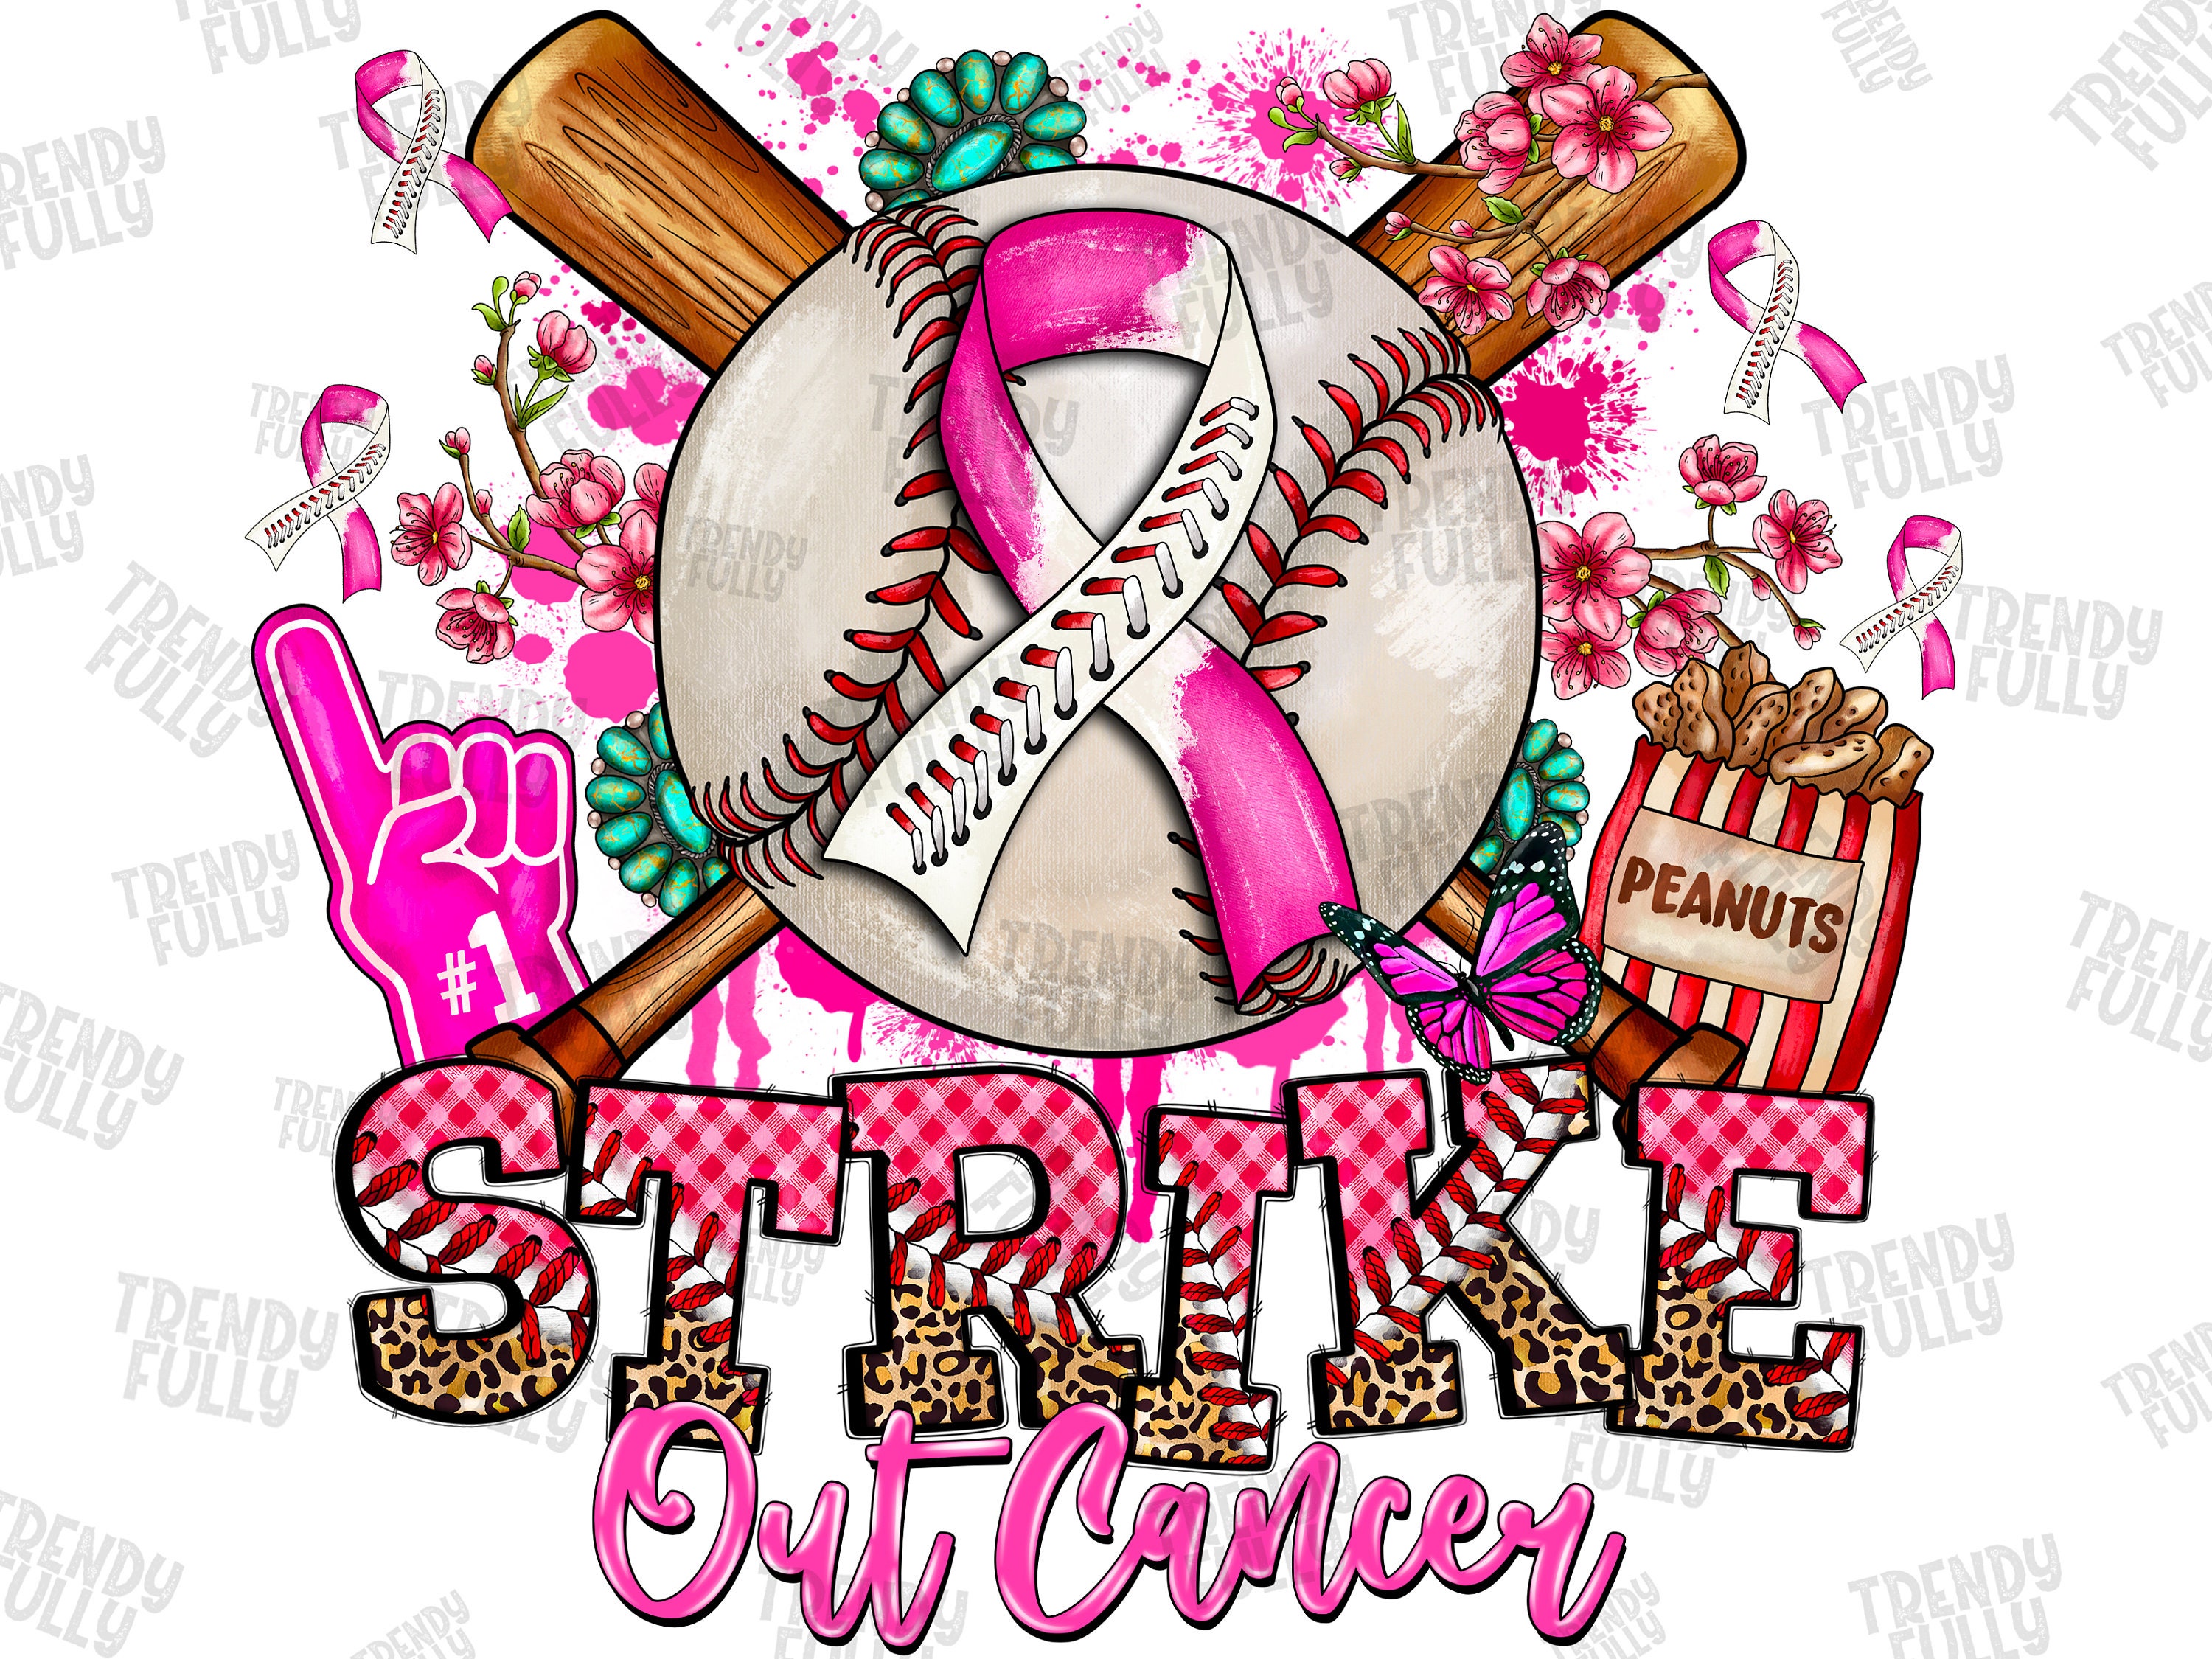 Mlb Tampa Bay Rays Baseball Team Pink Ribbon Together We Fight